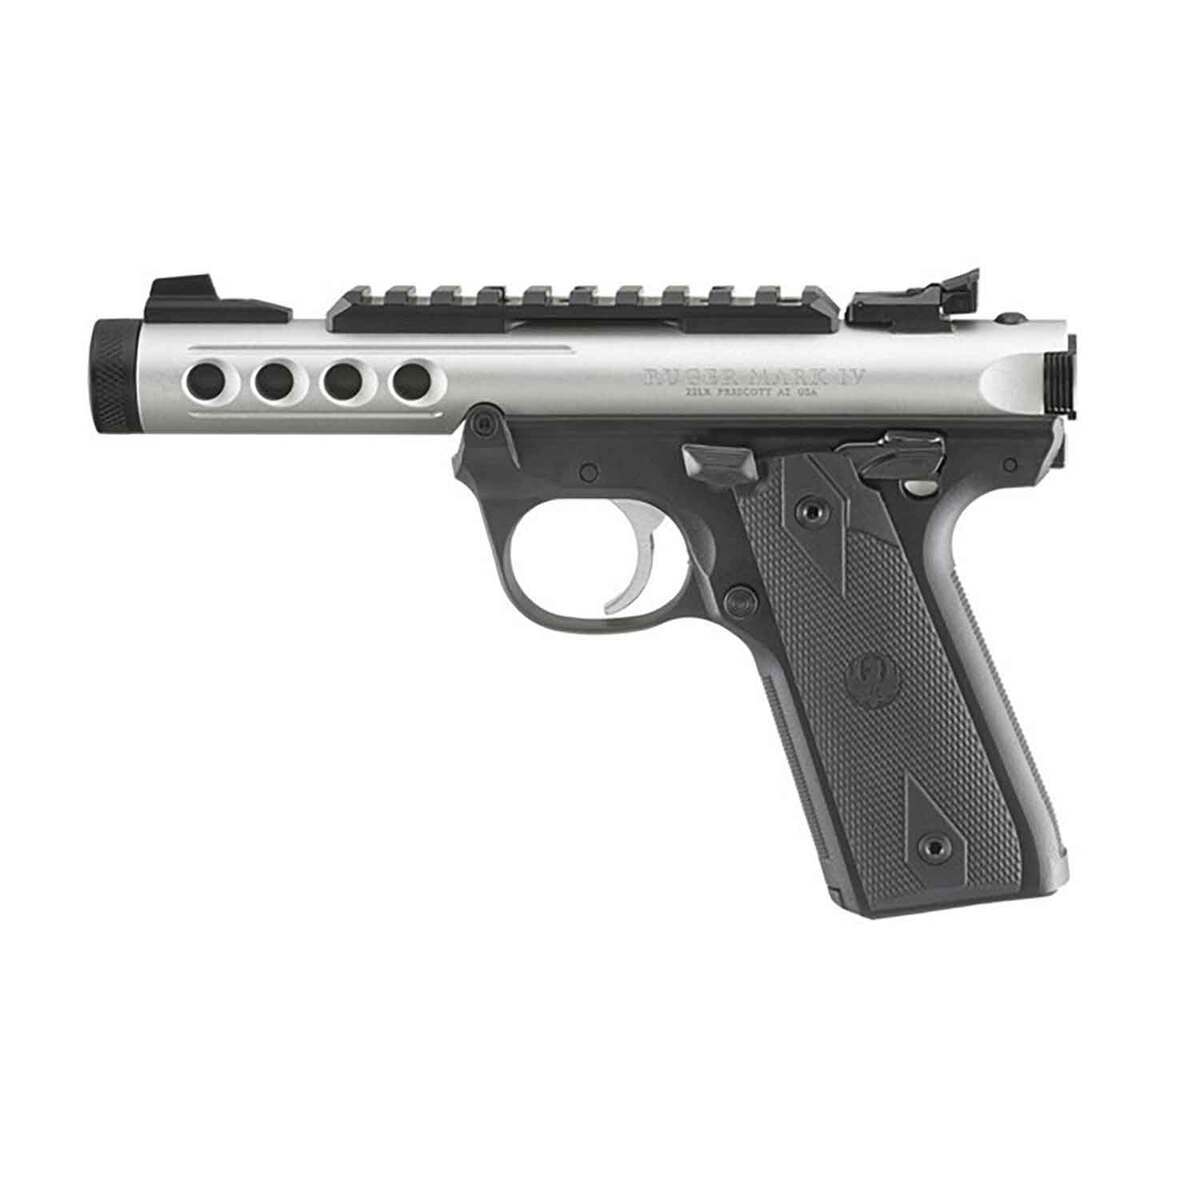 https://www.sportsmans.com/medias/ruger-mark-iv-2245-lite-22-long-rifle-44in-clear-anodized-aluminum-pistol-101-rounds-1790200-1.jpg?context=bWFzdGVyfGltYWdlc3w0NzEyM3xpbWFnZS9qcGVnfGgxOS9oOGEvMTEwNjkxNDQ3NjAzNTAvMTc5MDIwMC0xX2Jhc2UtY29udmVyc2lvbkZvcm1hdF8xMjAwLWNvbnZlcnNpb25Gb3JtYXR8MDMyMzI5ODdiOTJiYzRiZTUwMWZkYTUwYWFlZDBmYzhhZTk4YmQzNDJmZDVjYjQ4OGI5NDE2ODQyNGRmODk1Mg